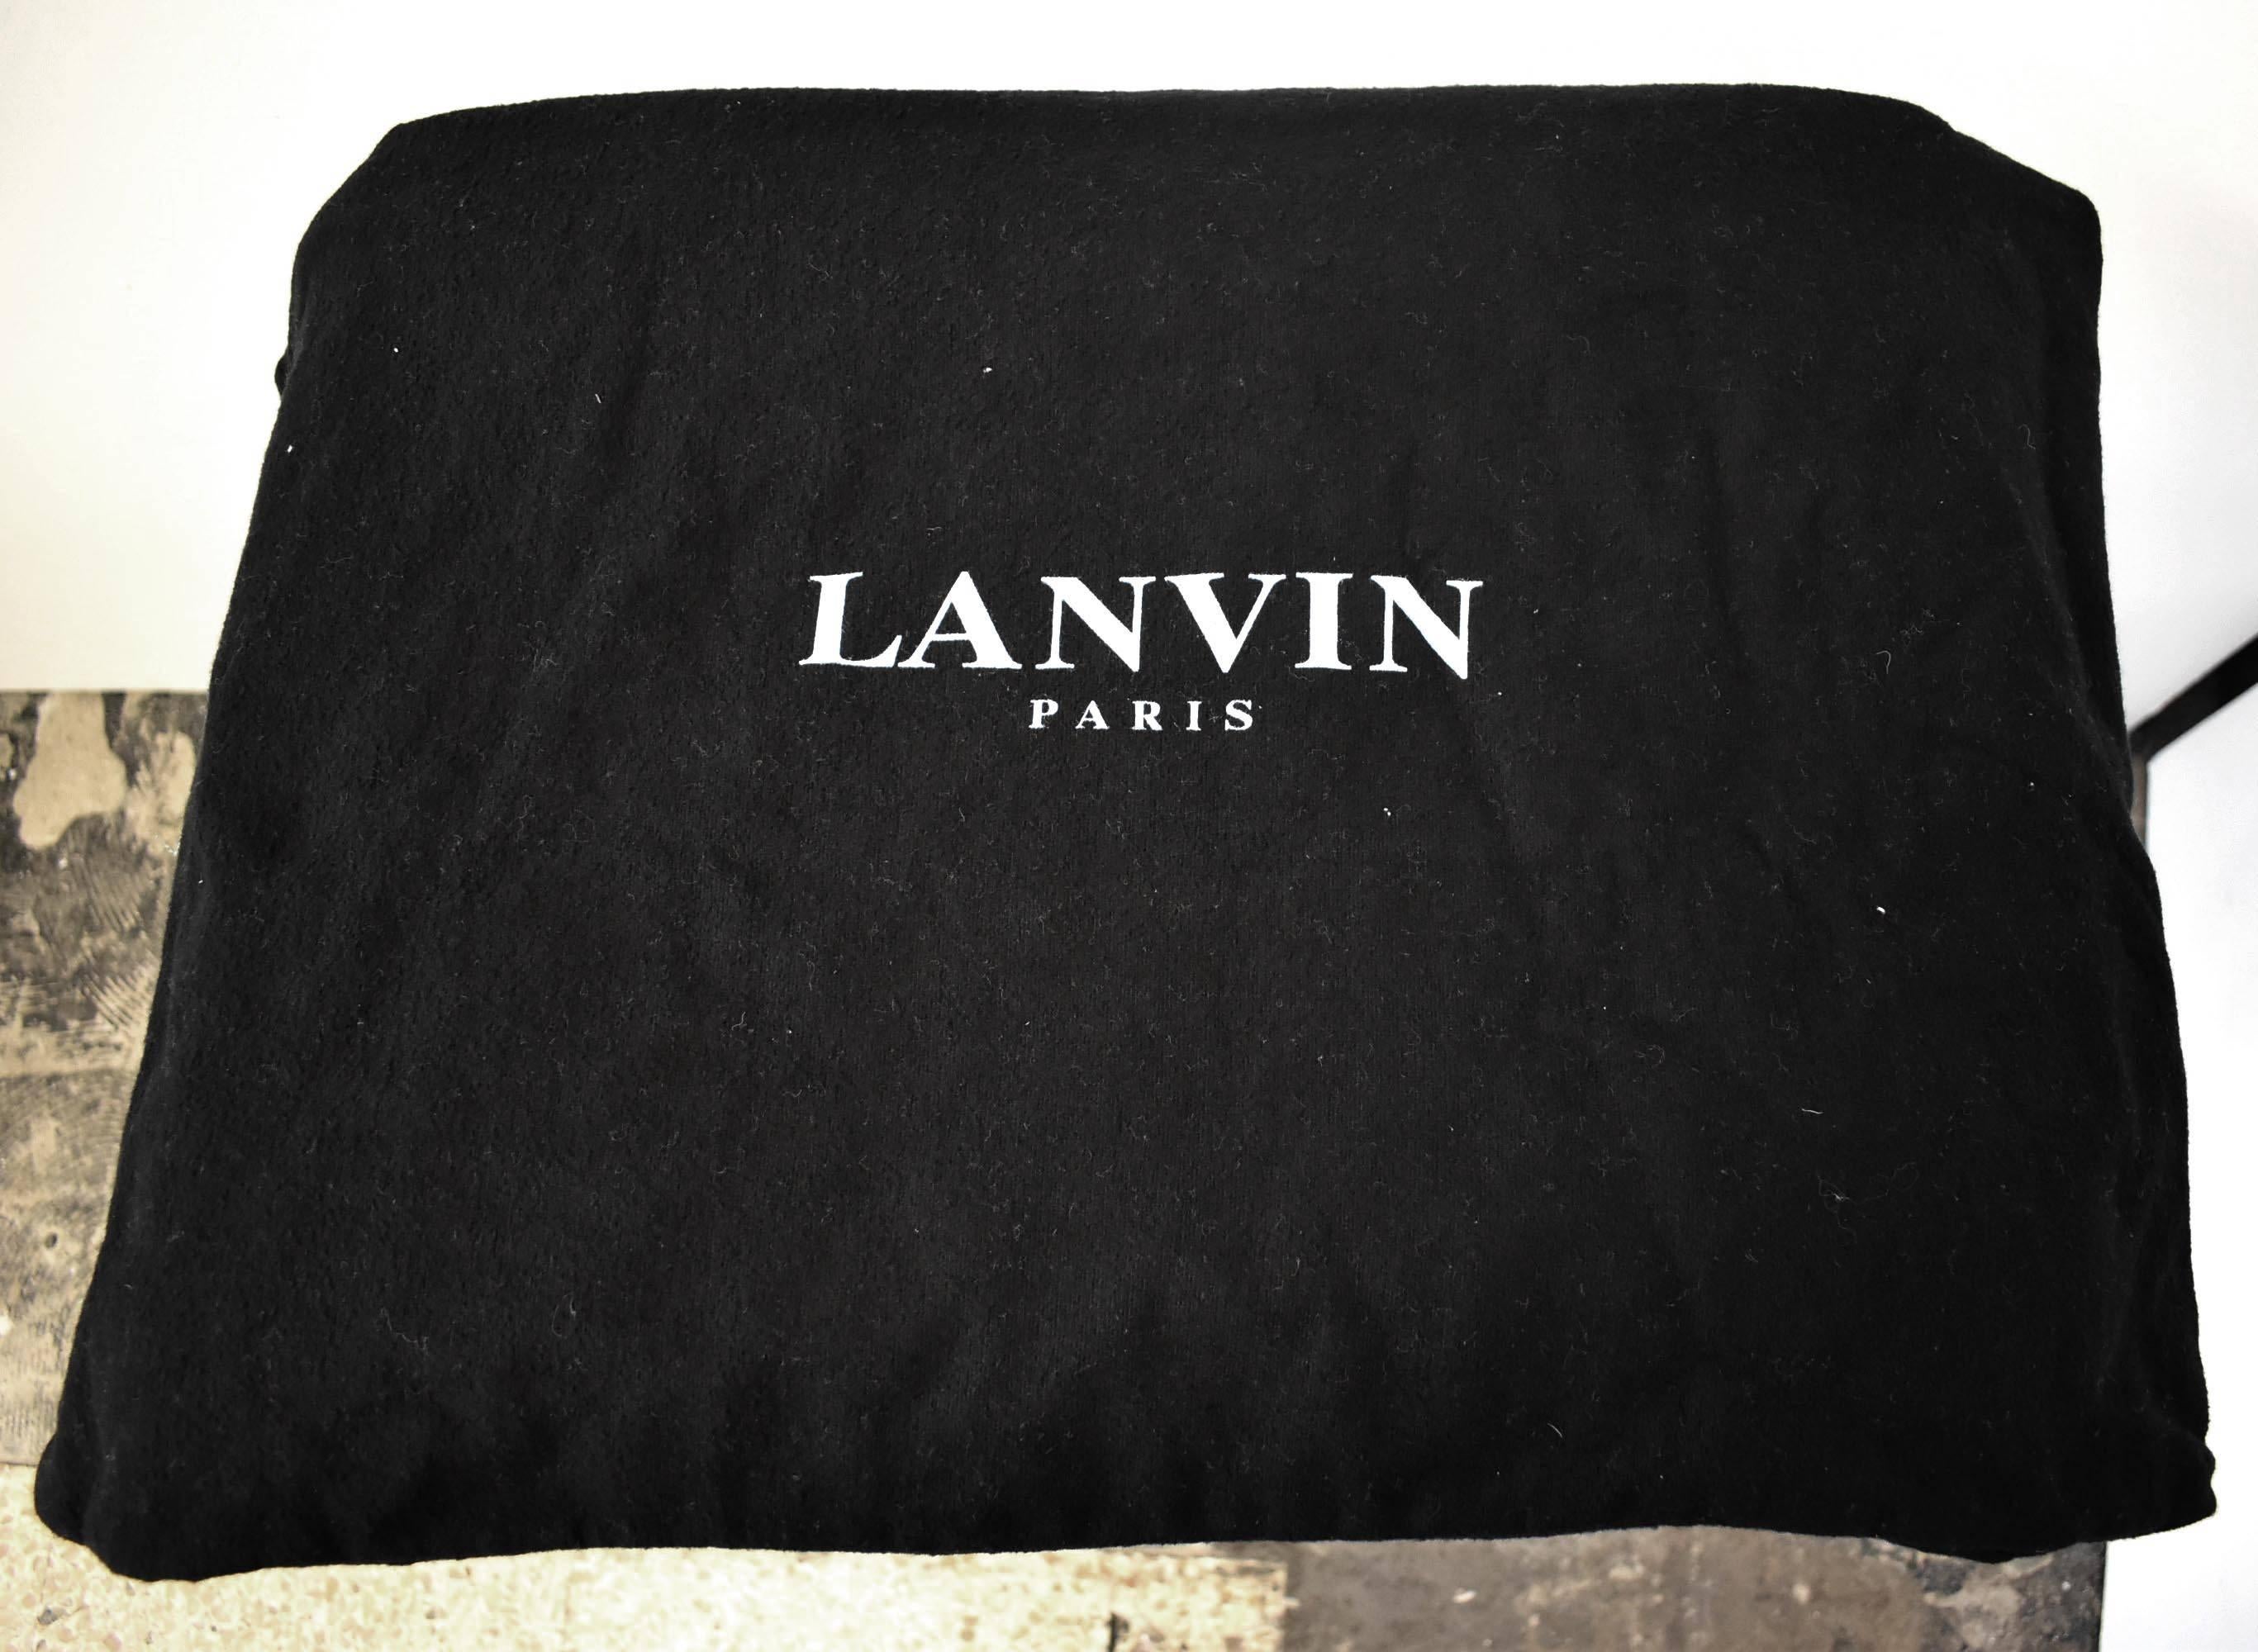 Lanvin Black Leather Oversize Tote Handbag  2